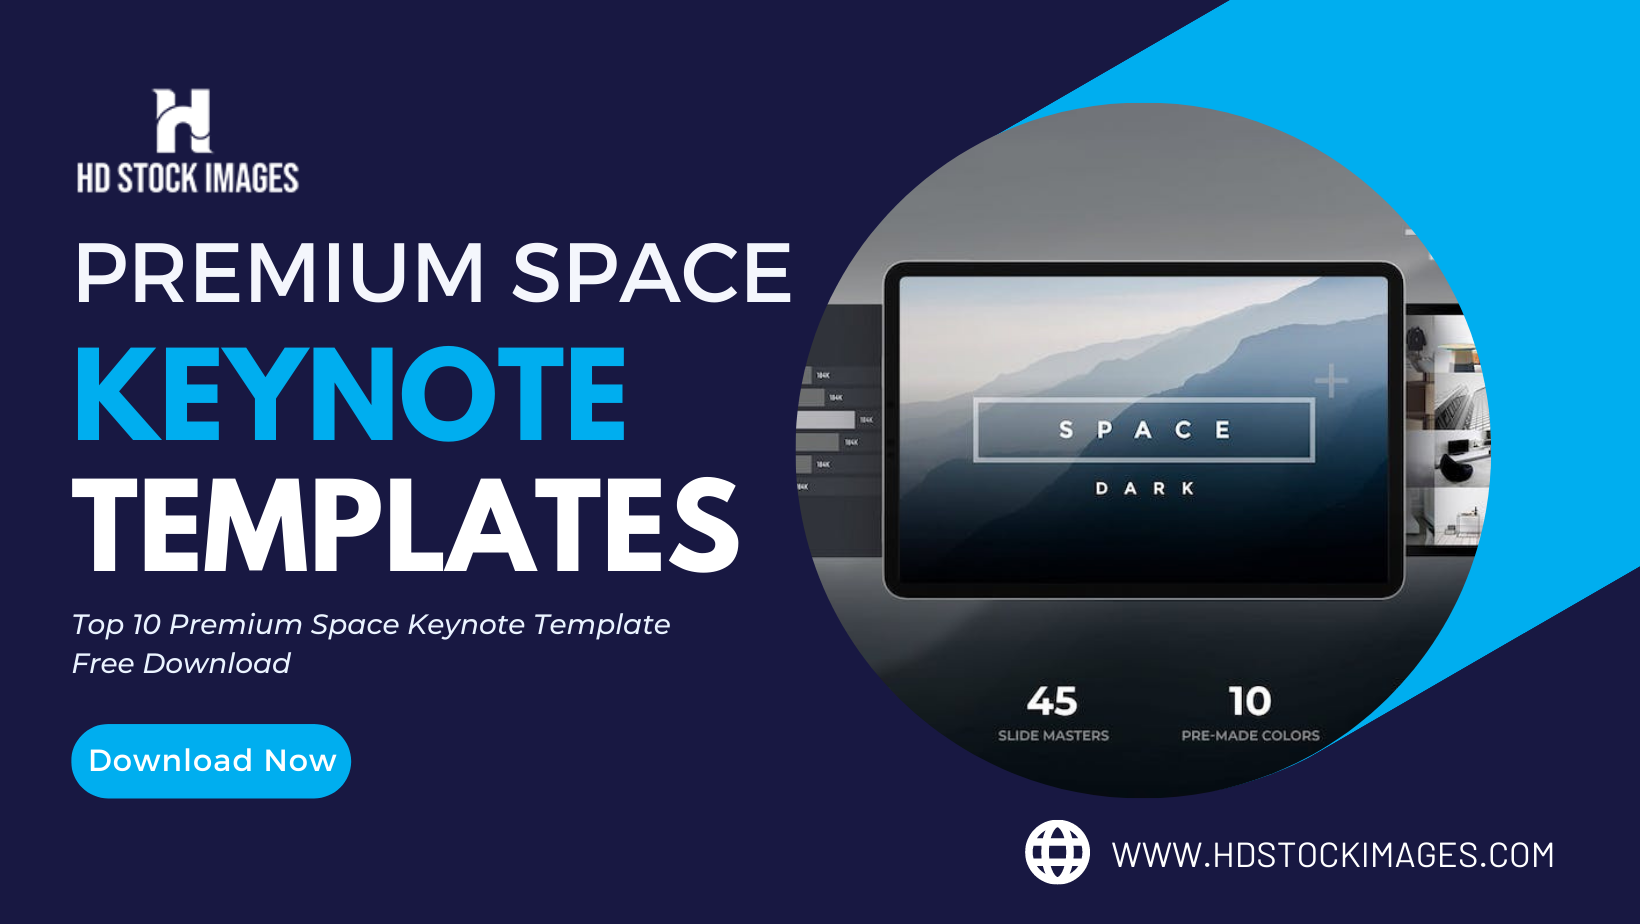 Top 10 Premium Space Keynote Templates Free Download